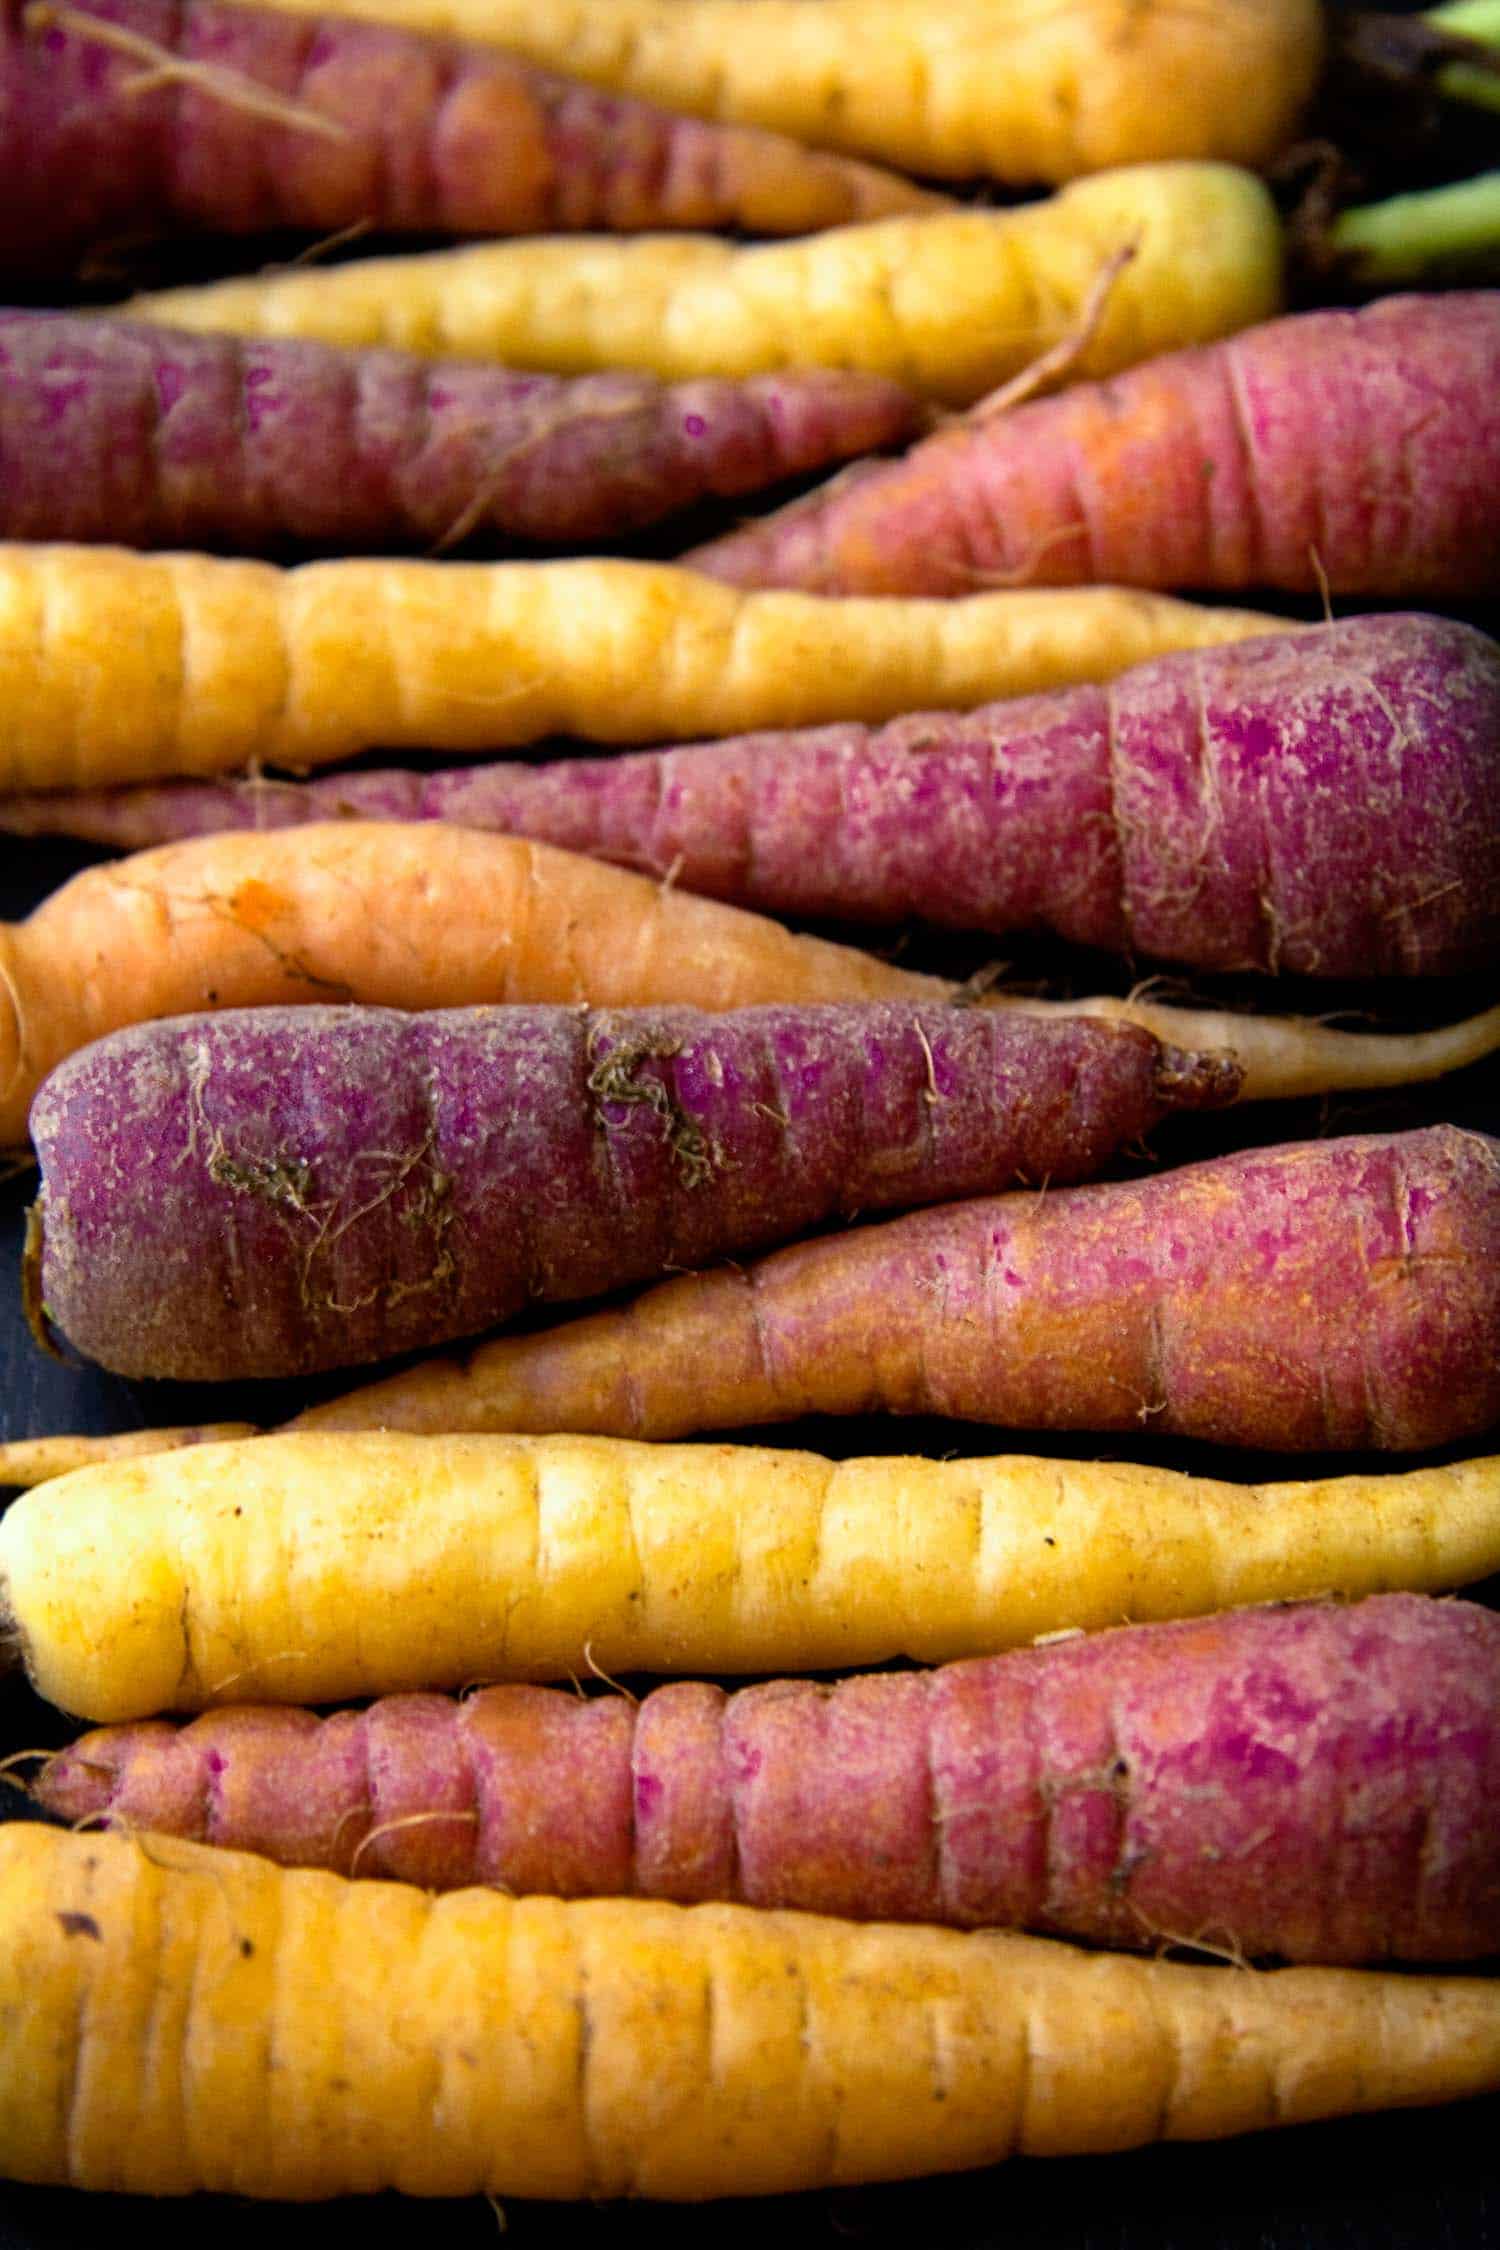 Rainbow carrots lined up